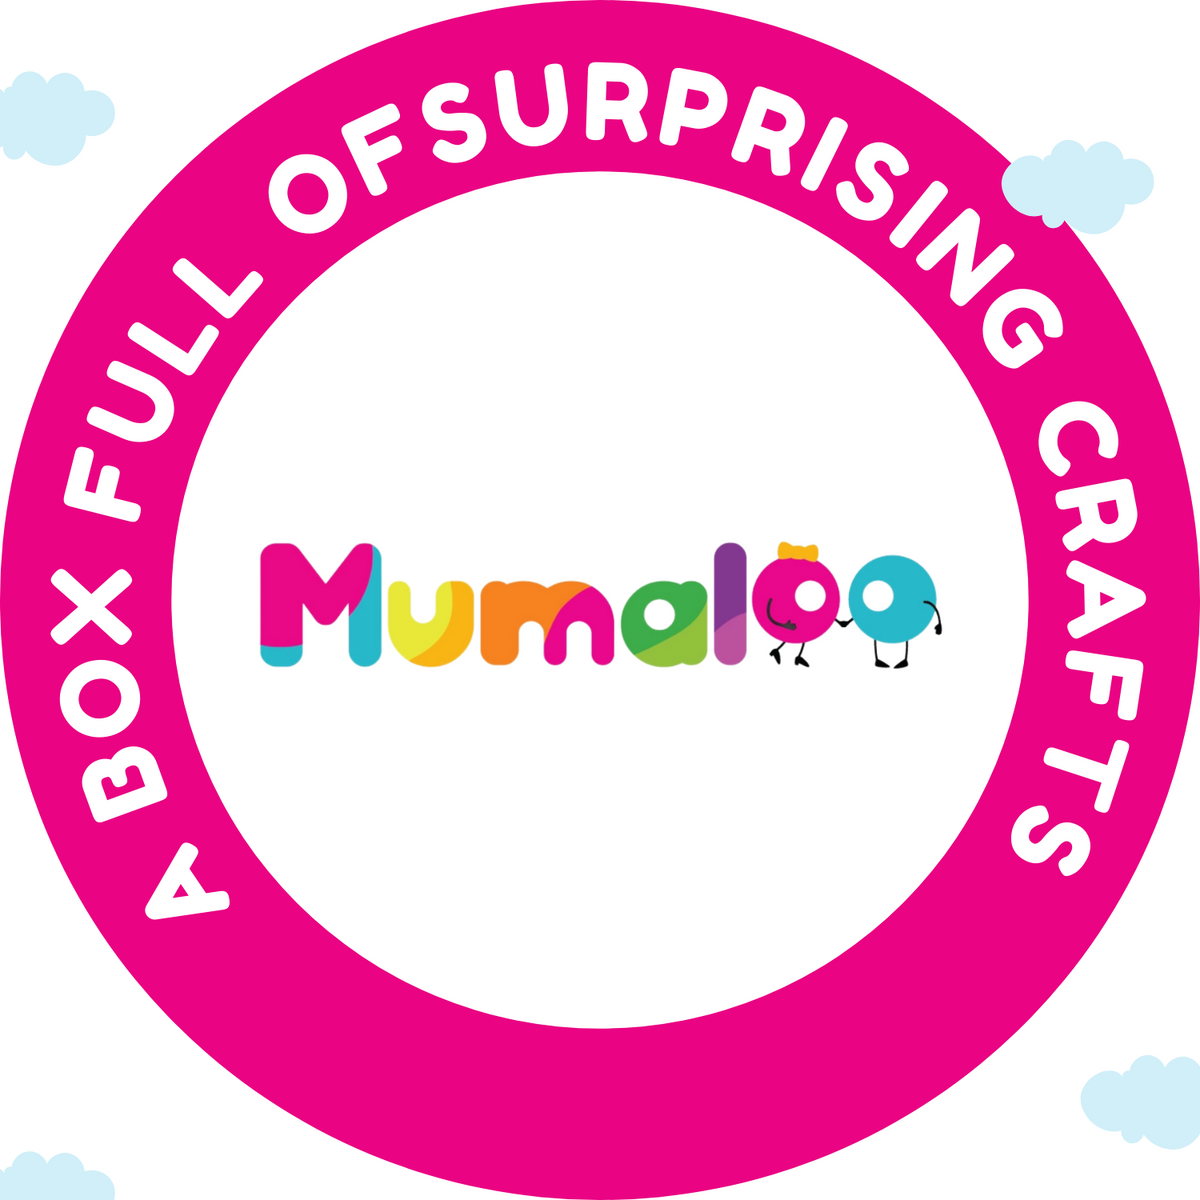 mumaloo arts crafts kit for girls, kid craft kits, all inclusive